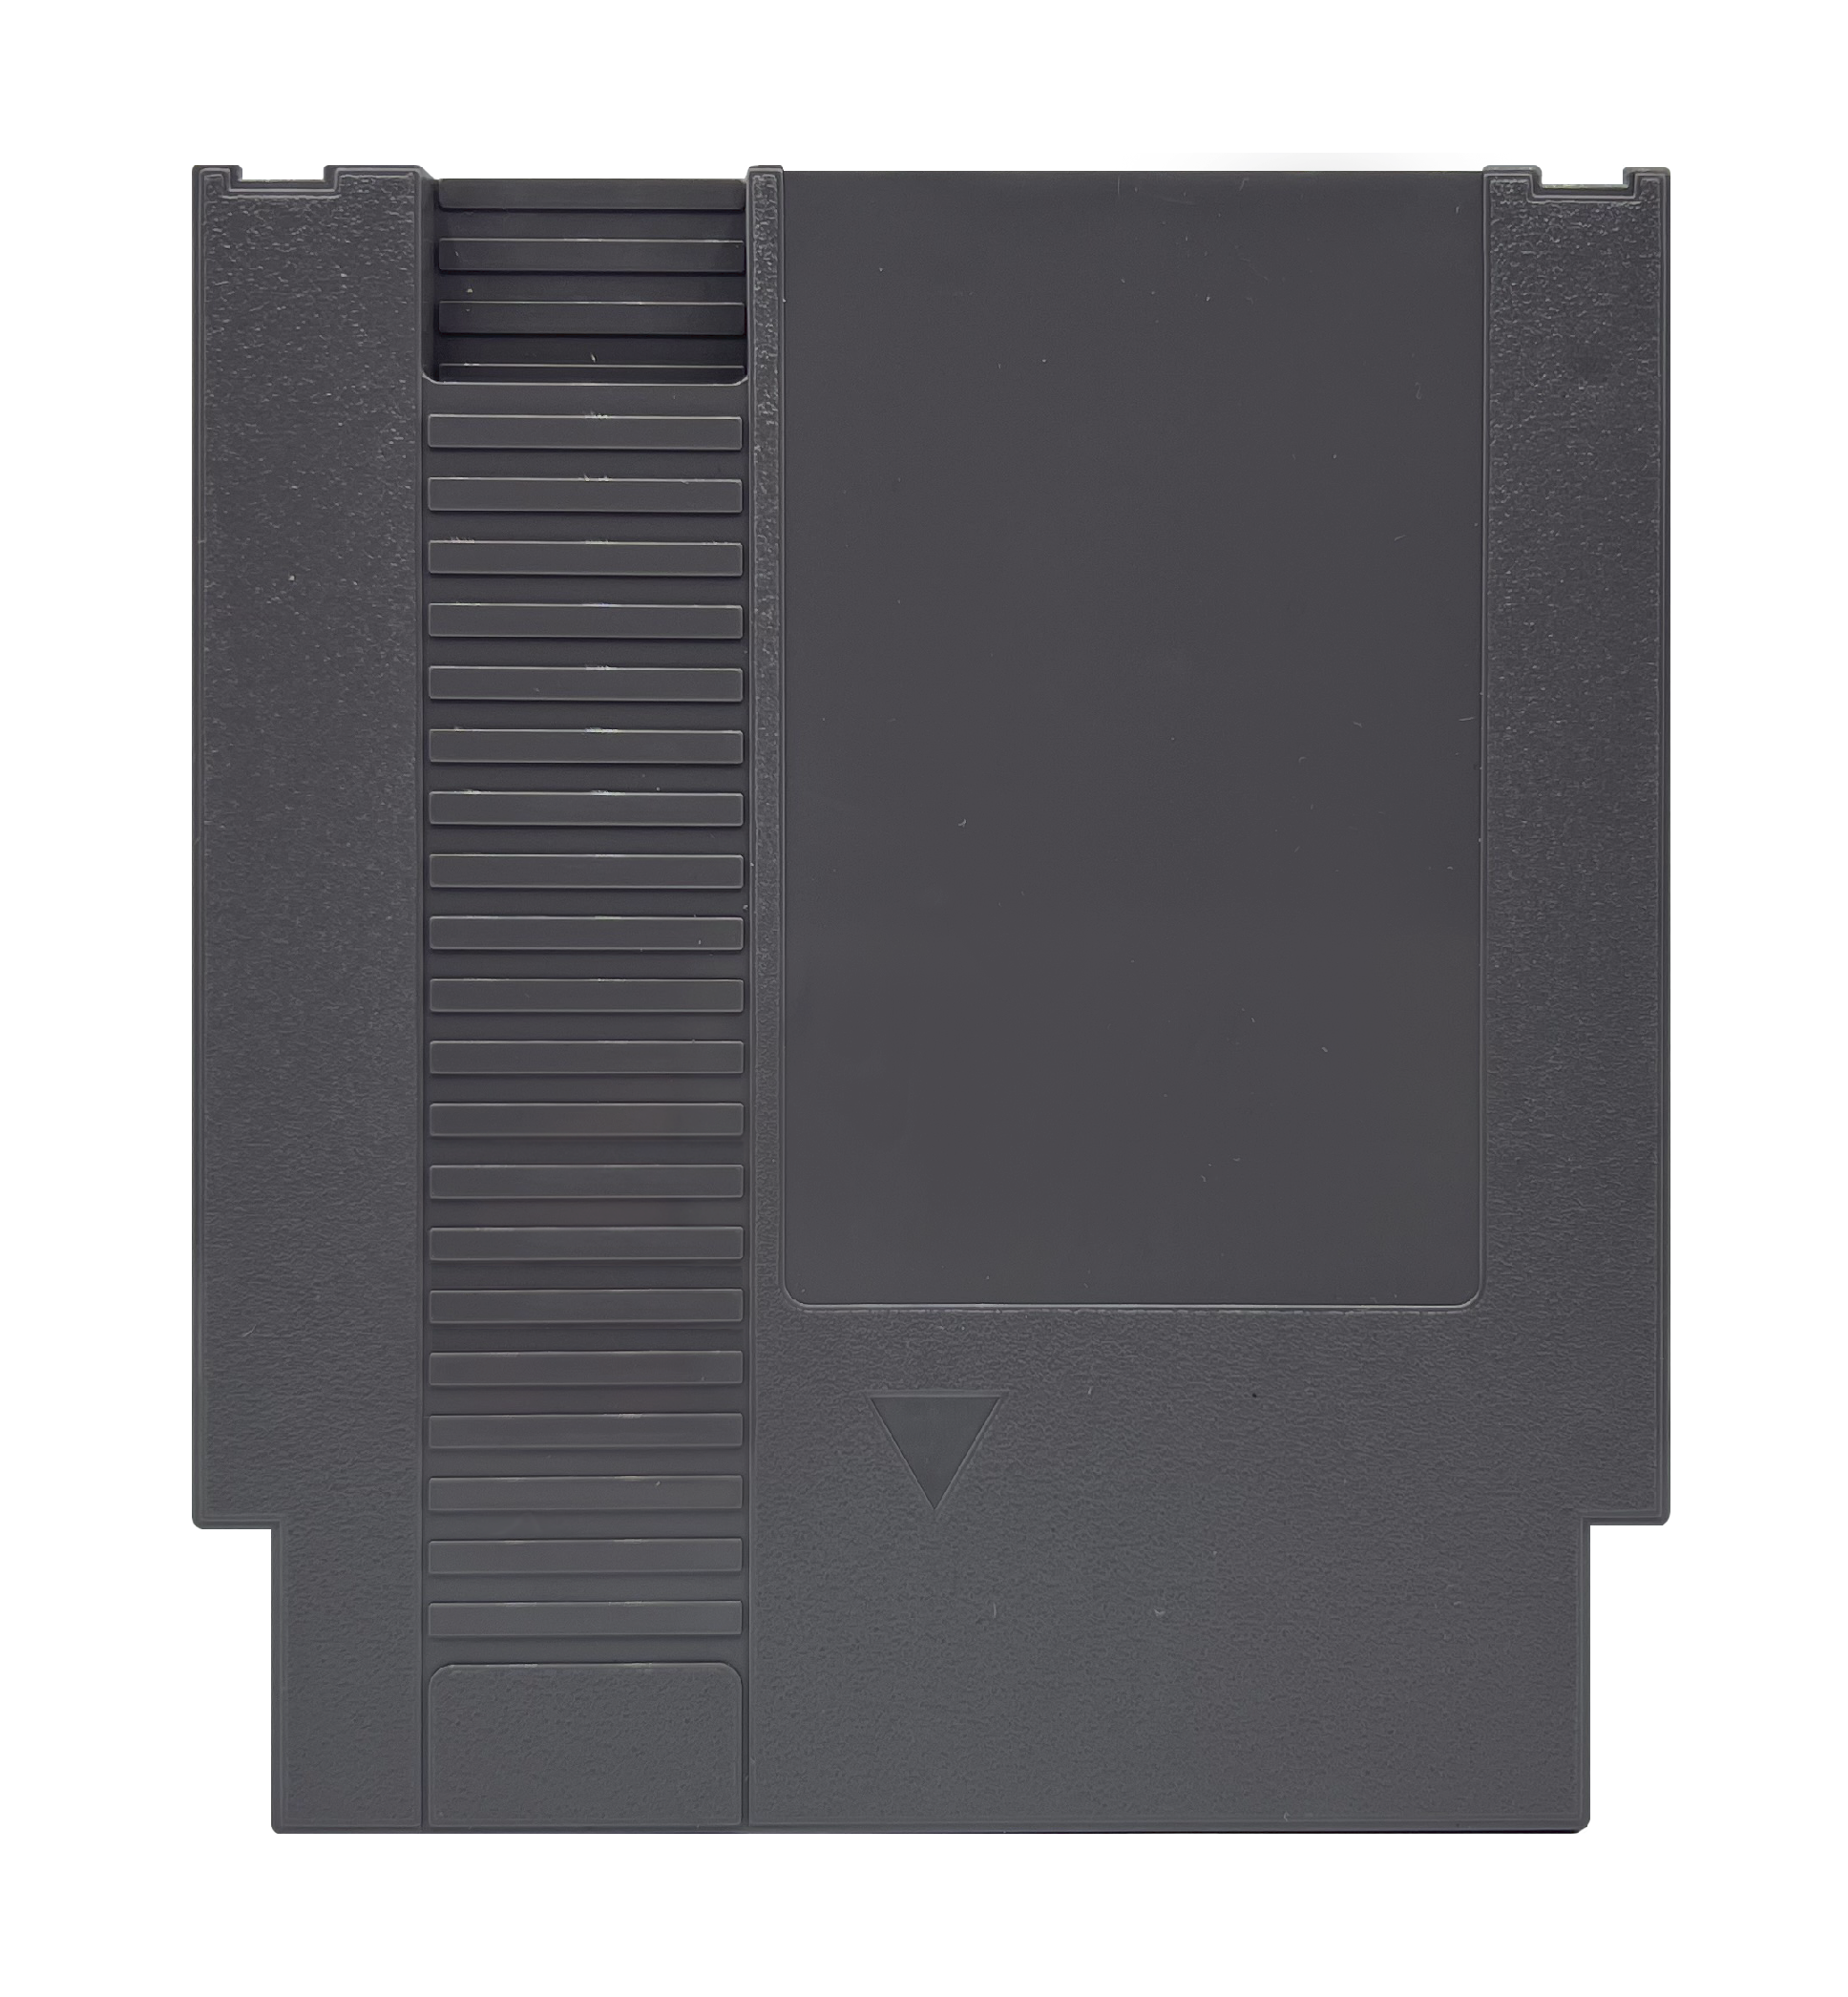 Standard Gray Grey NES (Nintendo Entertainment System) Replacement Cartridge Shell